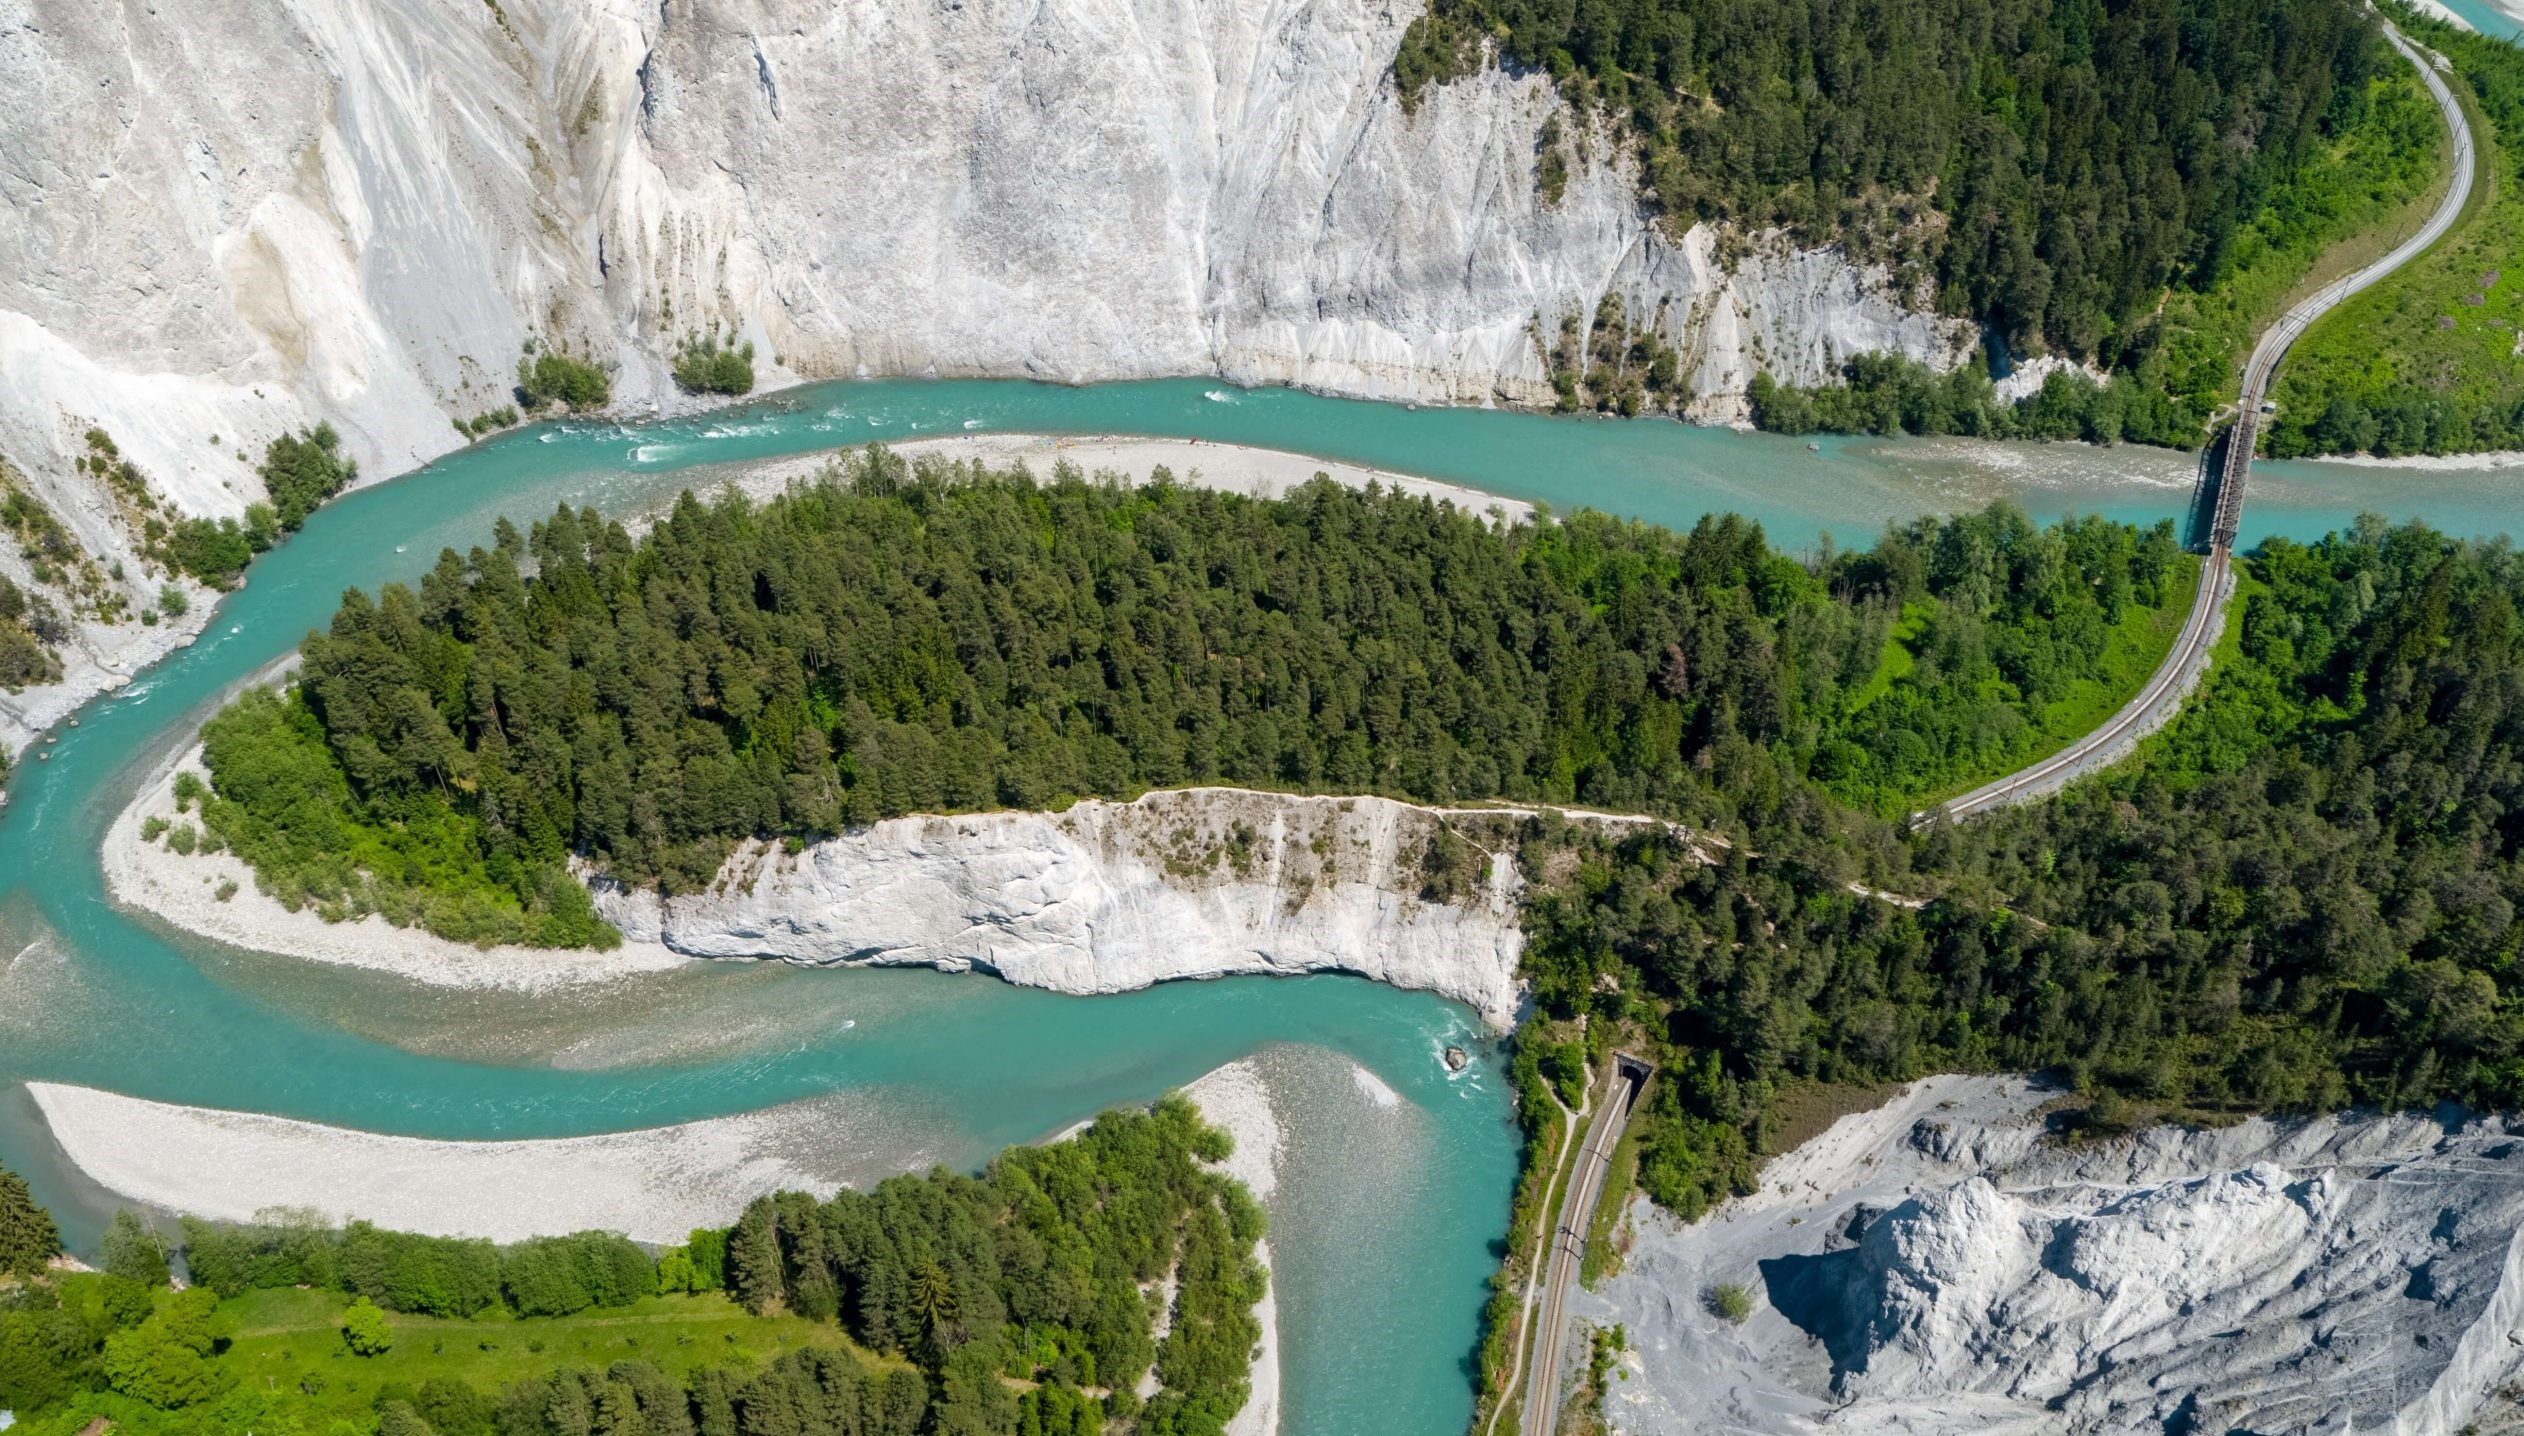 رودخانه سوئیس - عکس طبیعت زیبای سوئیس